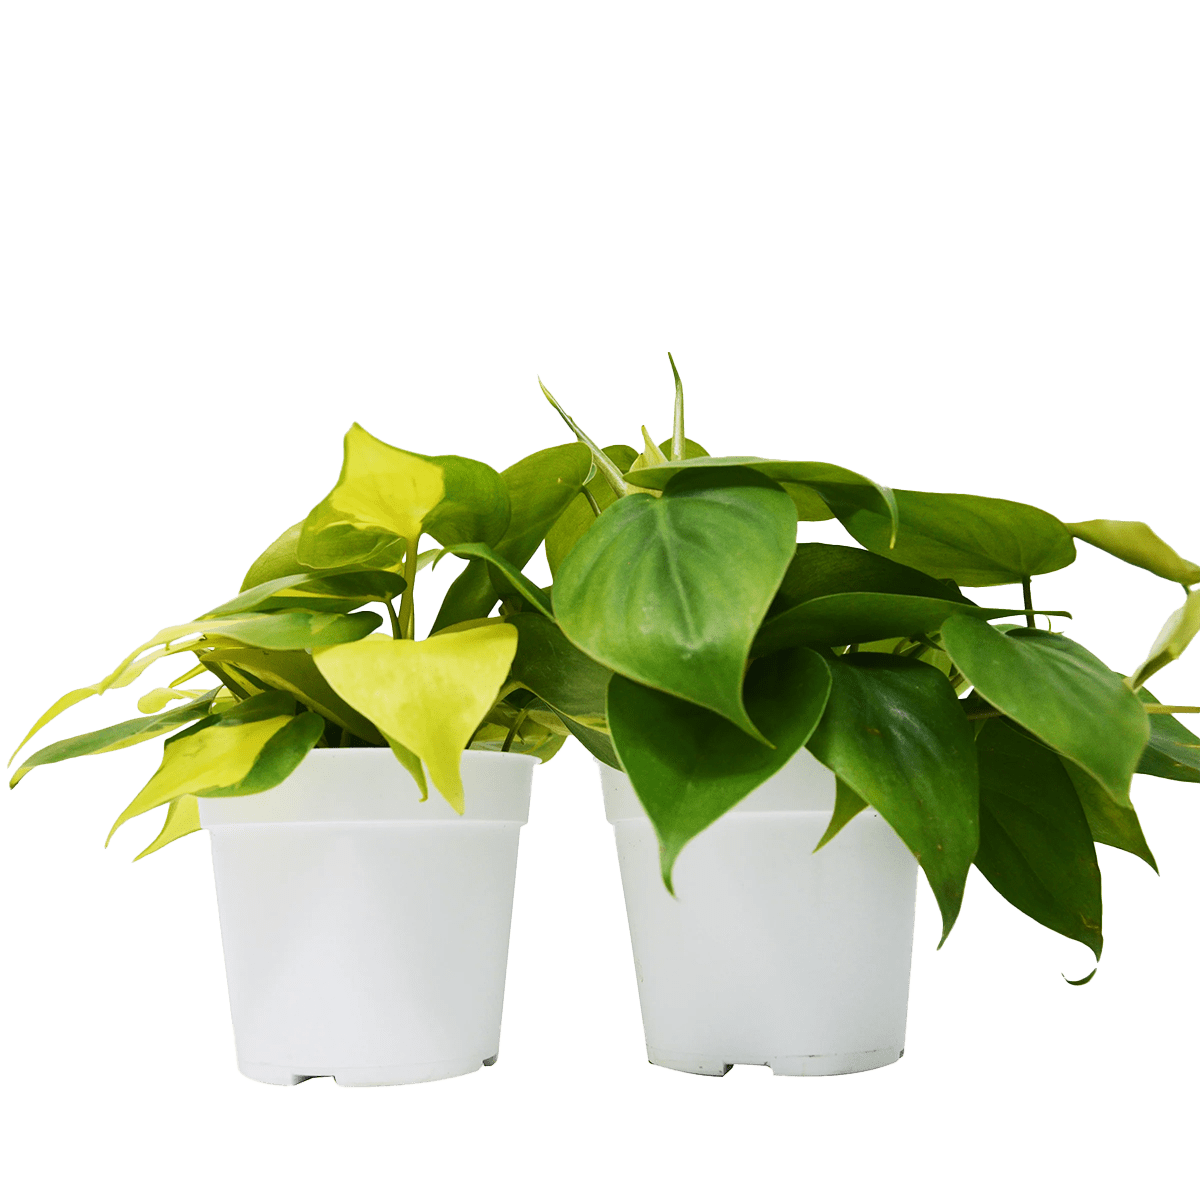 philodendron variety pack buy plants online cheap - best online plant nursery | houseplantsale.com - houseplants for sale online | best indoor plants | forget me not flower market